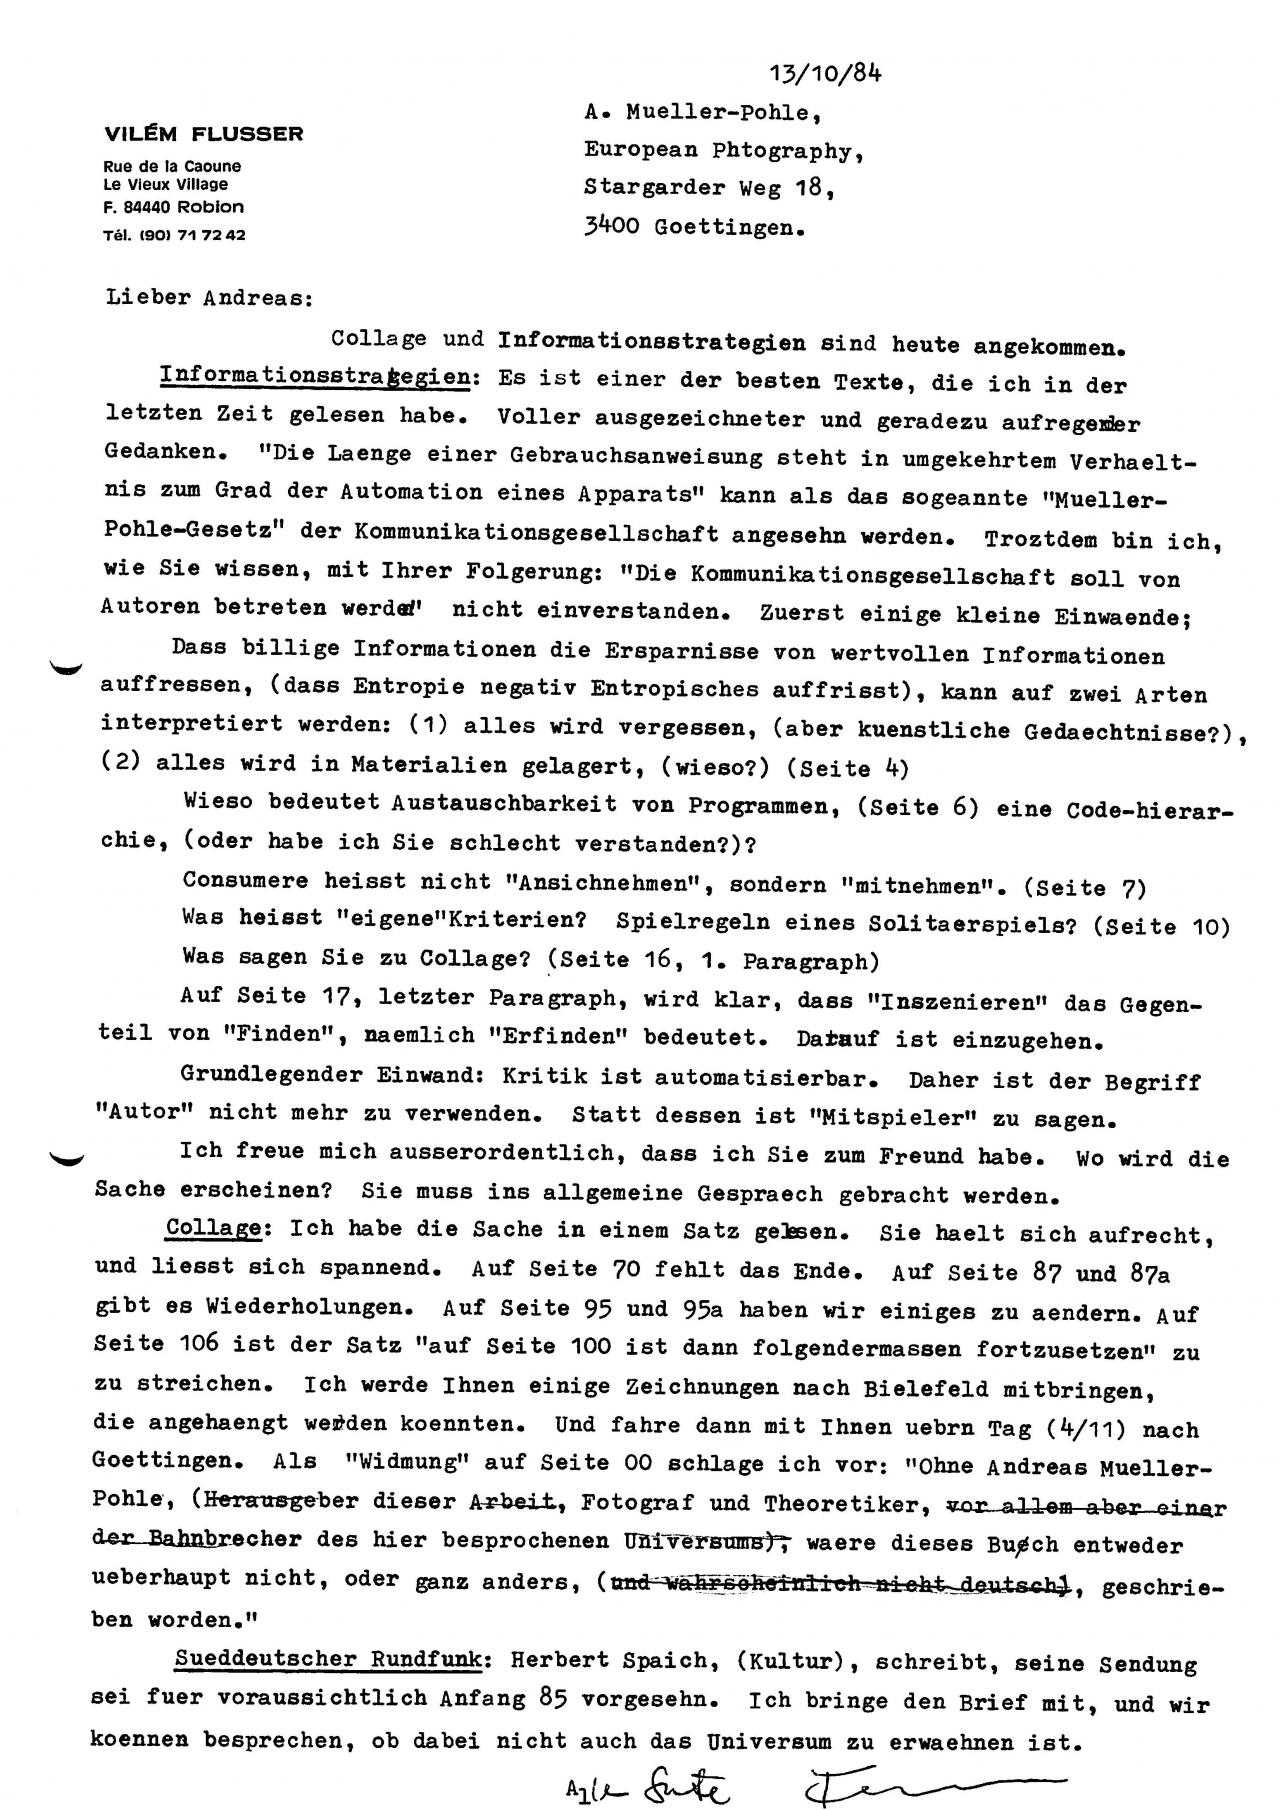 Letter from Vilém Flusser to Andreas Müller-Pohle, 13.10.1984